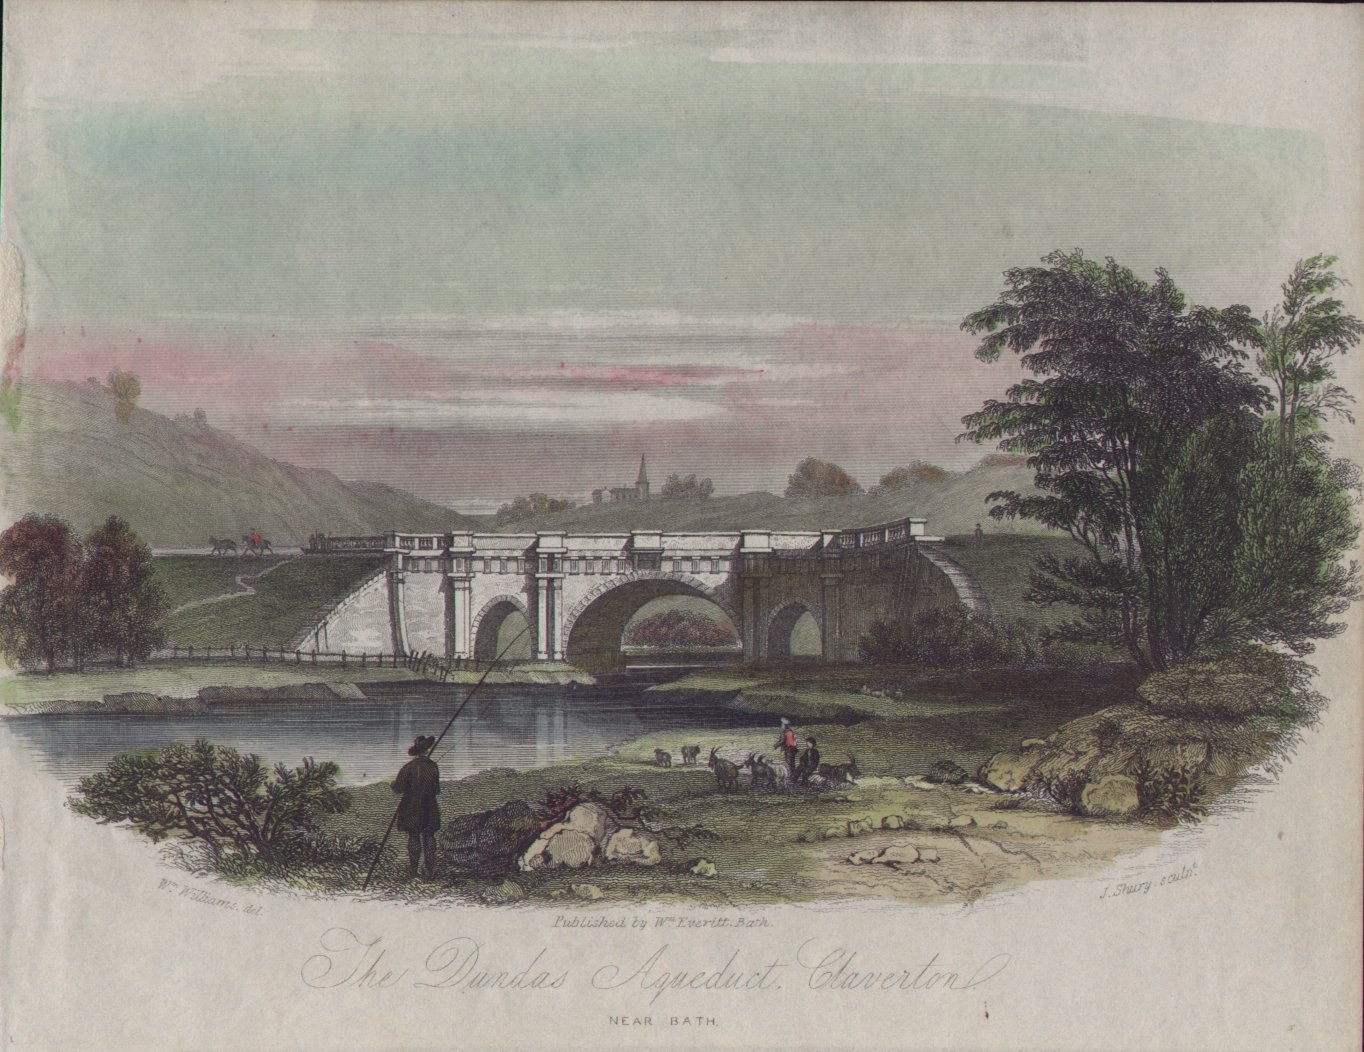 Steel Vignette - The Dundas Aqueduct, Claverton Near Bath - Shury